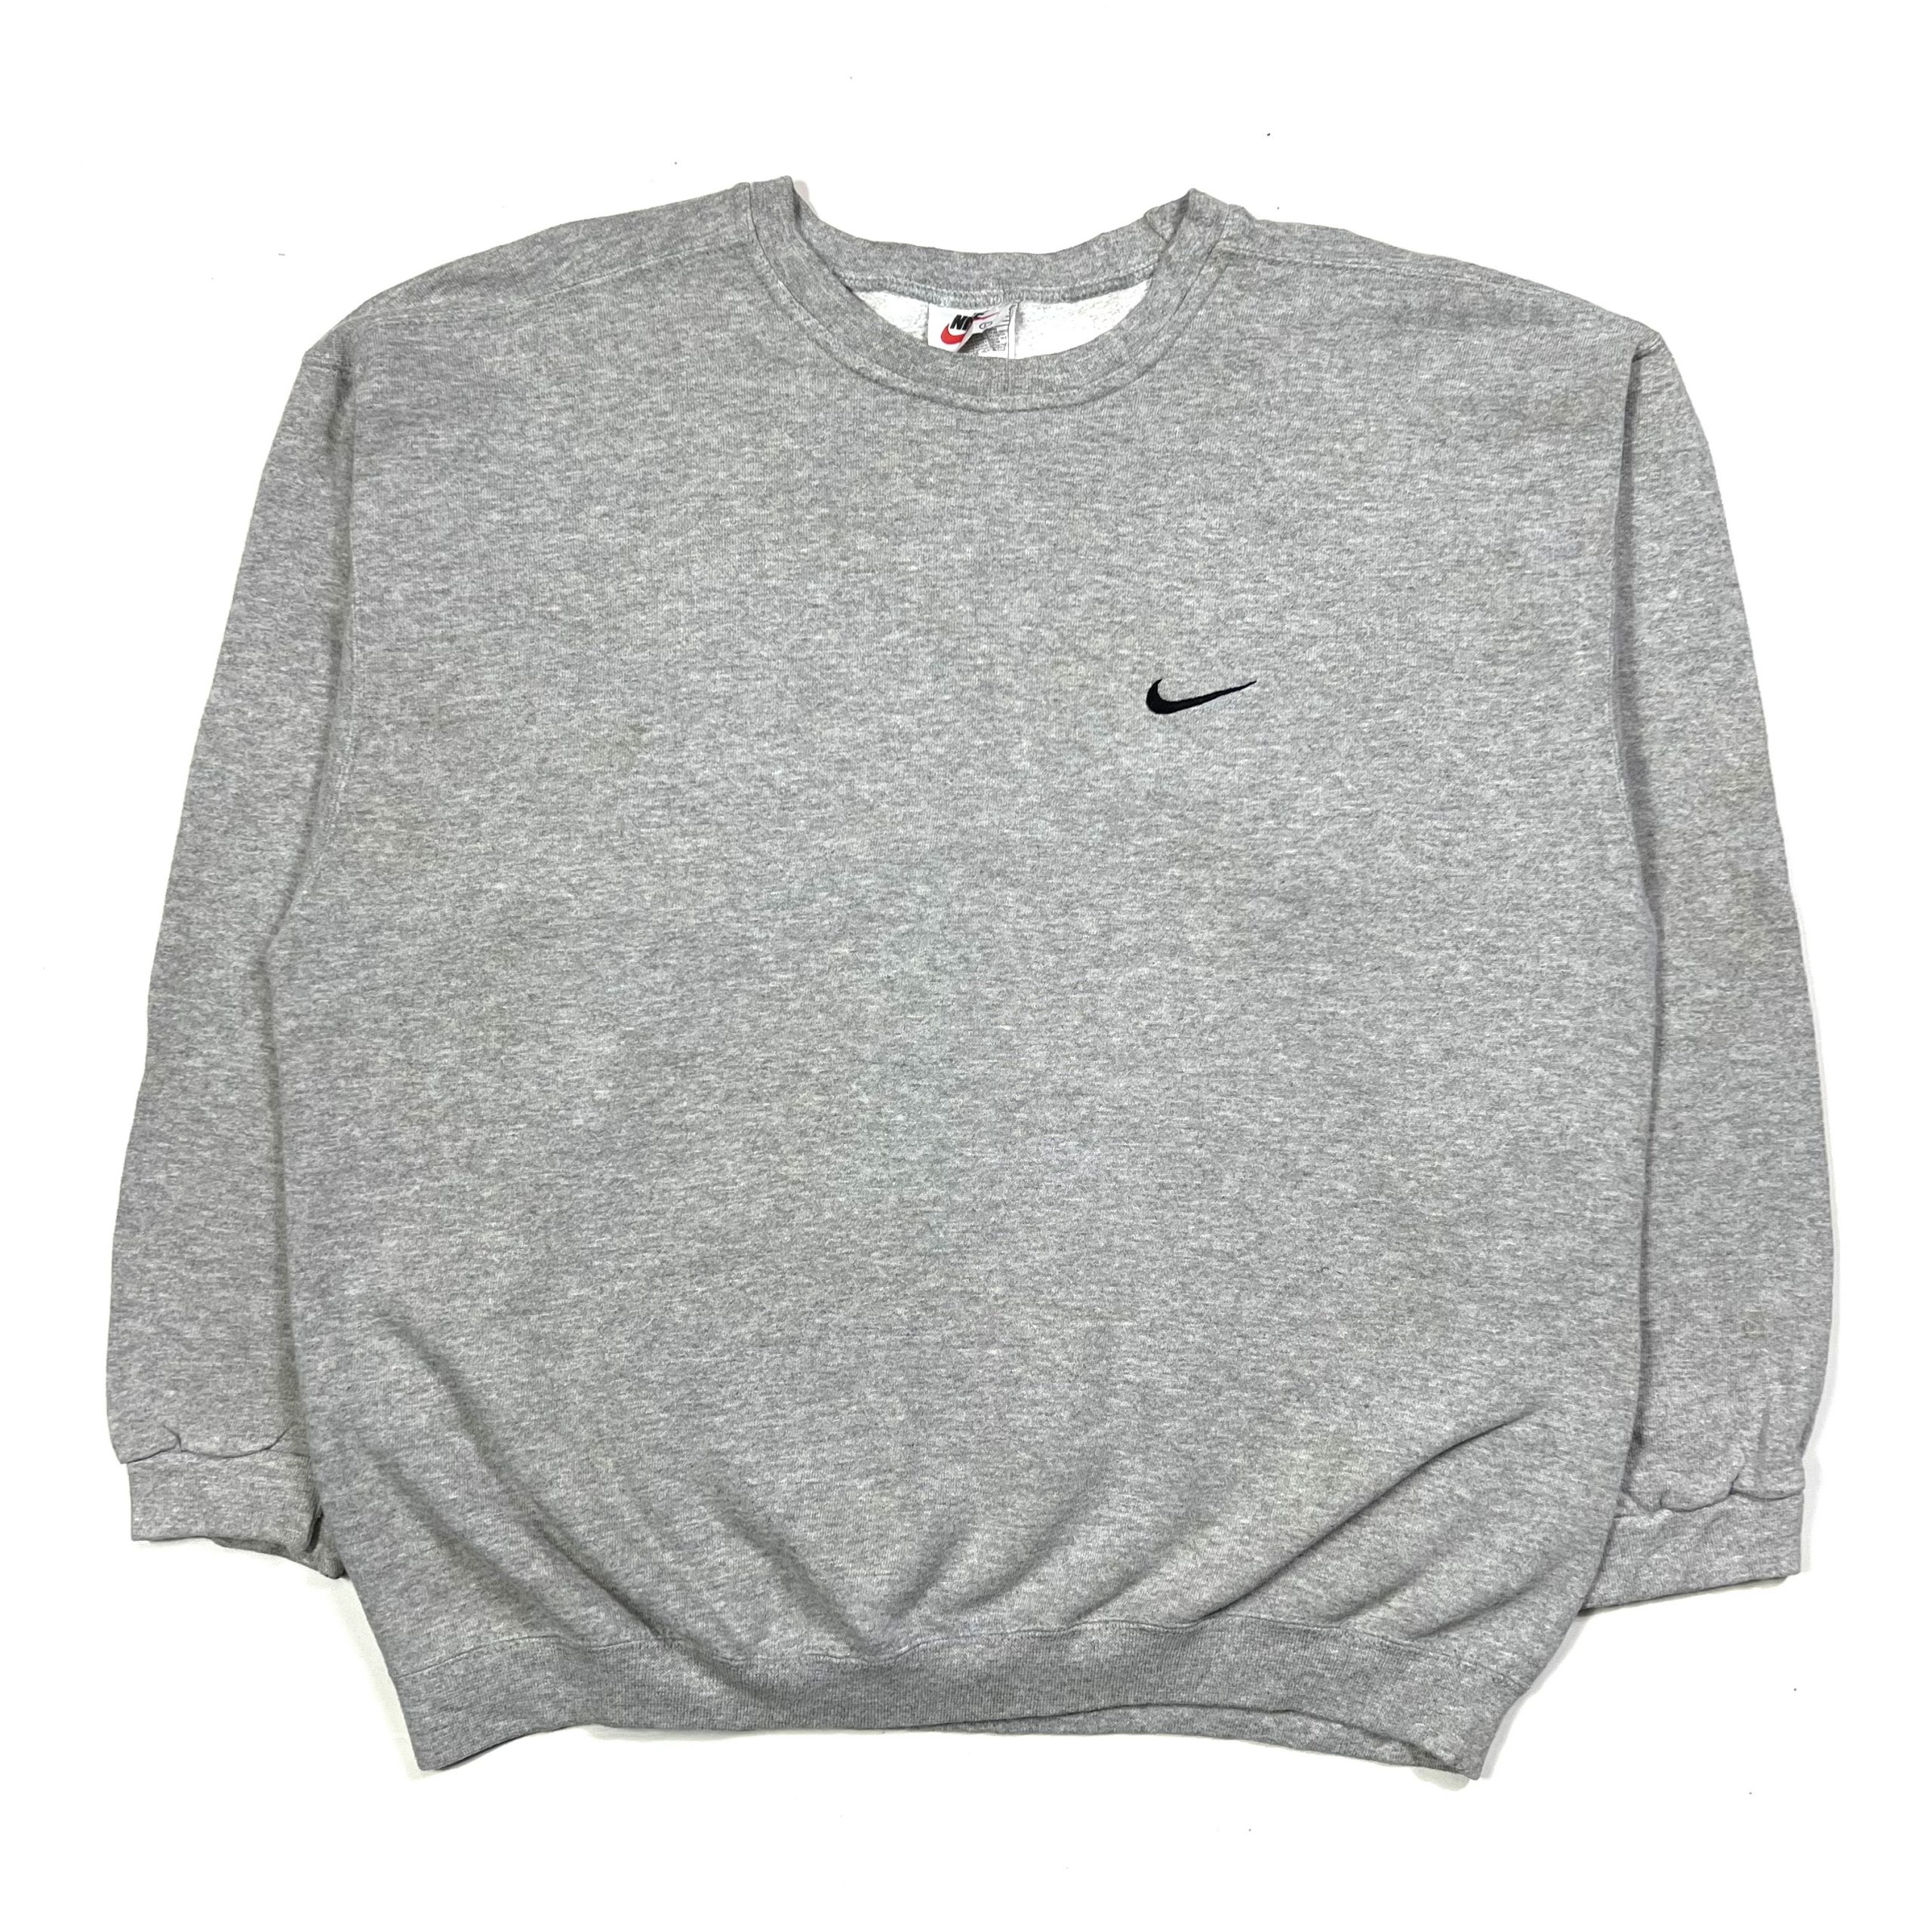 90’s Nike Swoosh Sweatshirt - Grey - TMC Vintage - Vintage Clothing